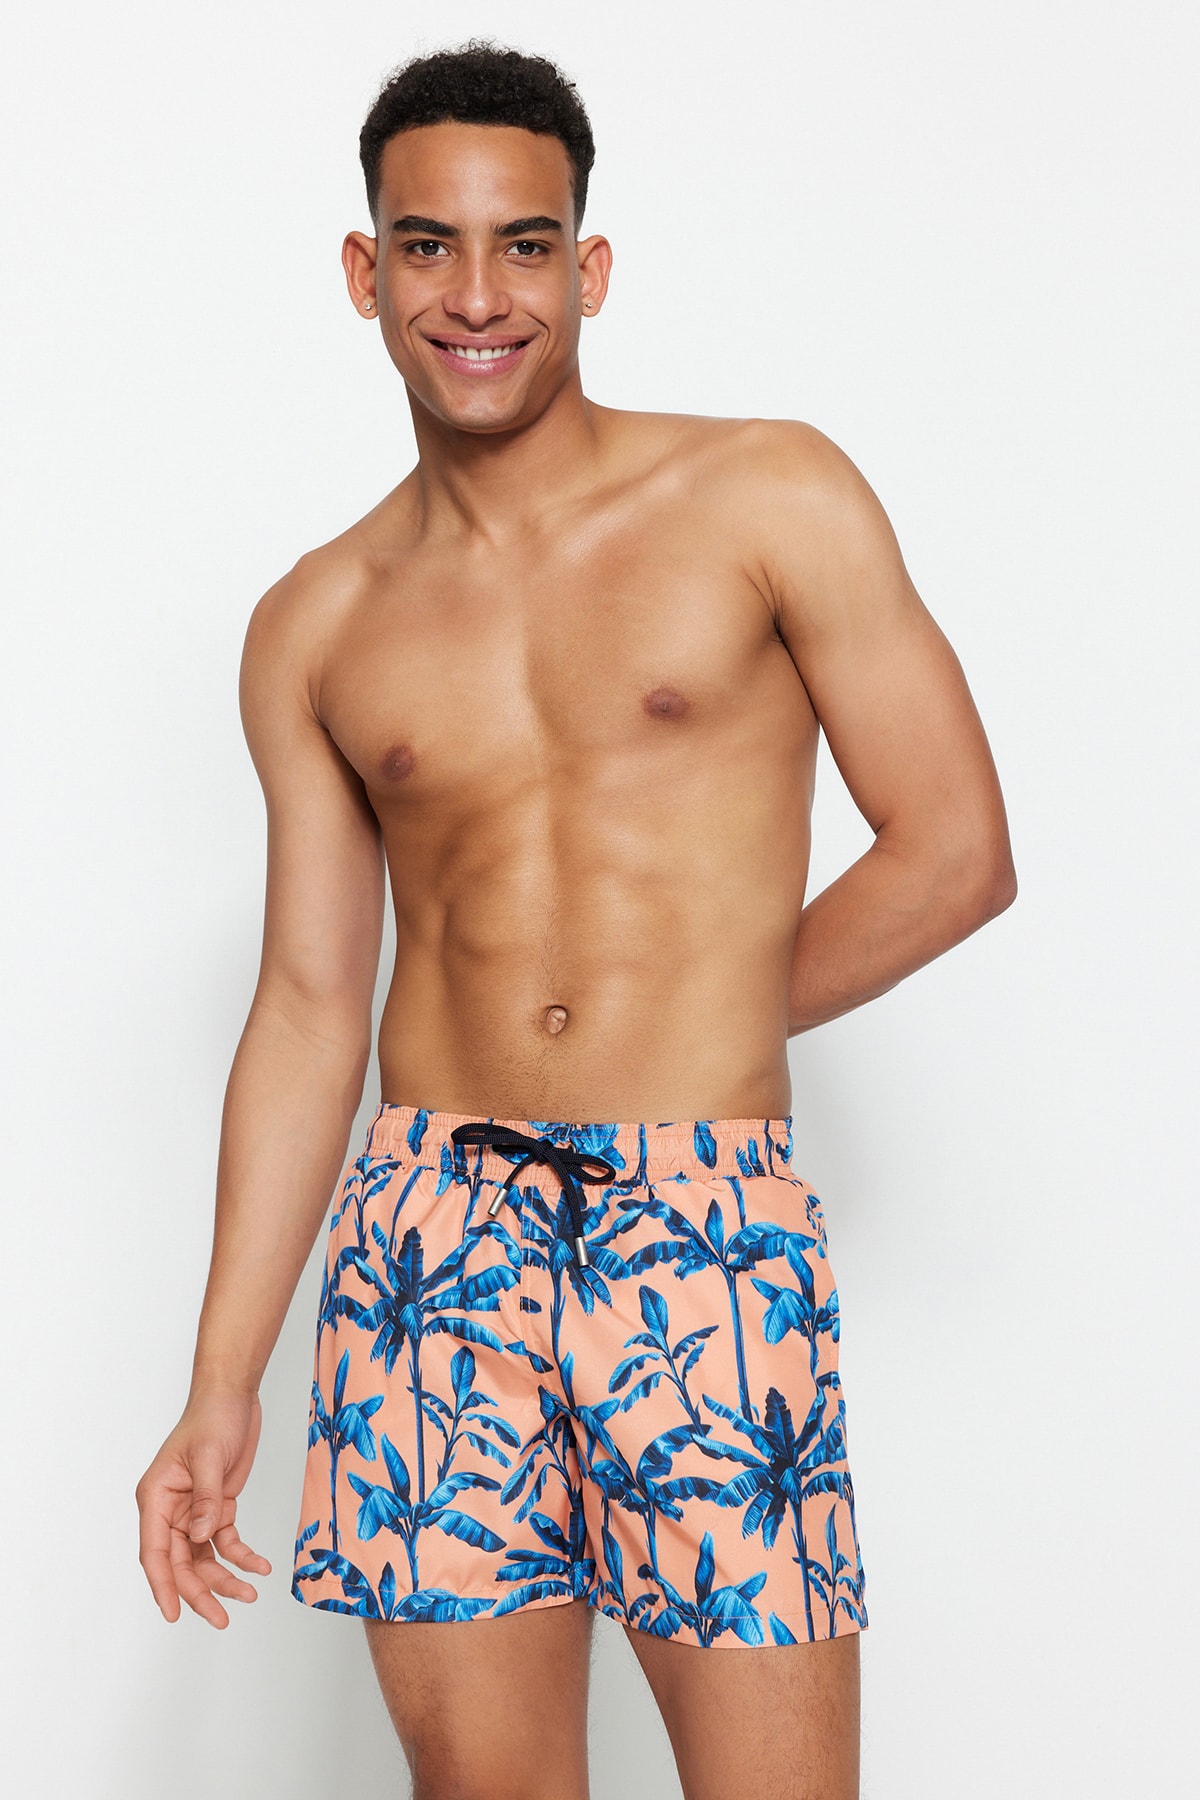 Trendyol Orange Men's Standard Size Tropical Printed Swimwear Marine Shorts